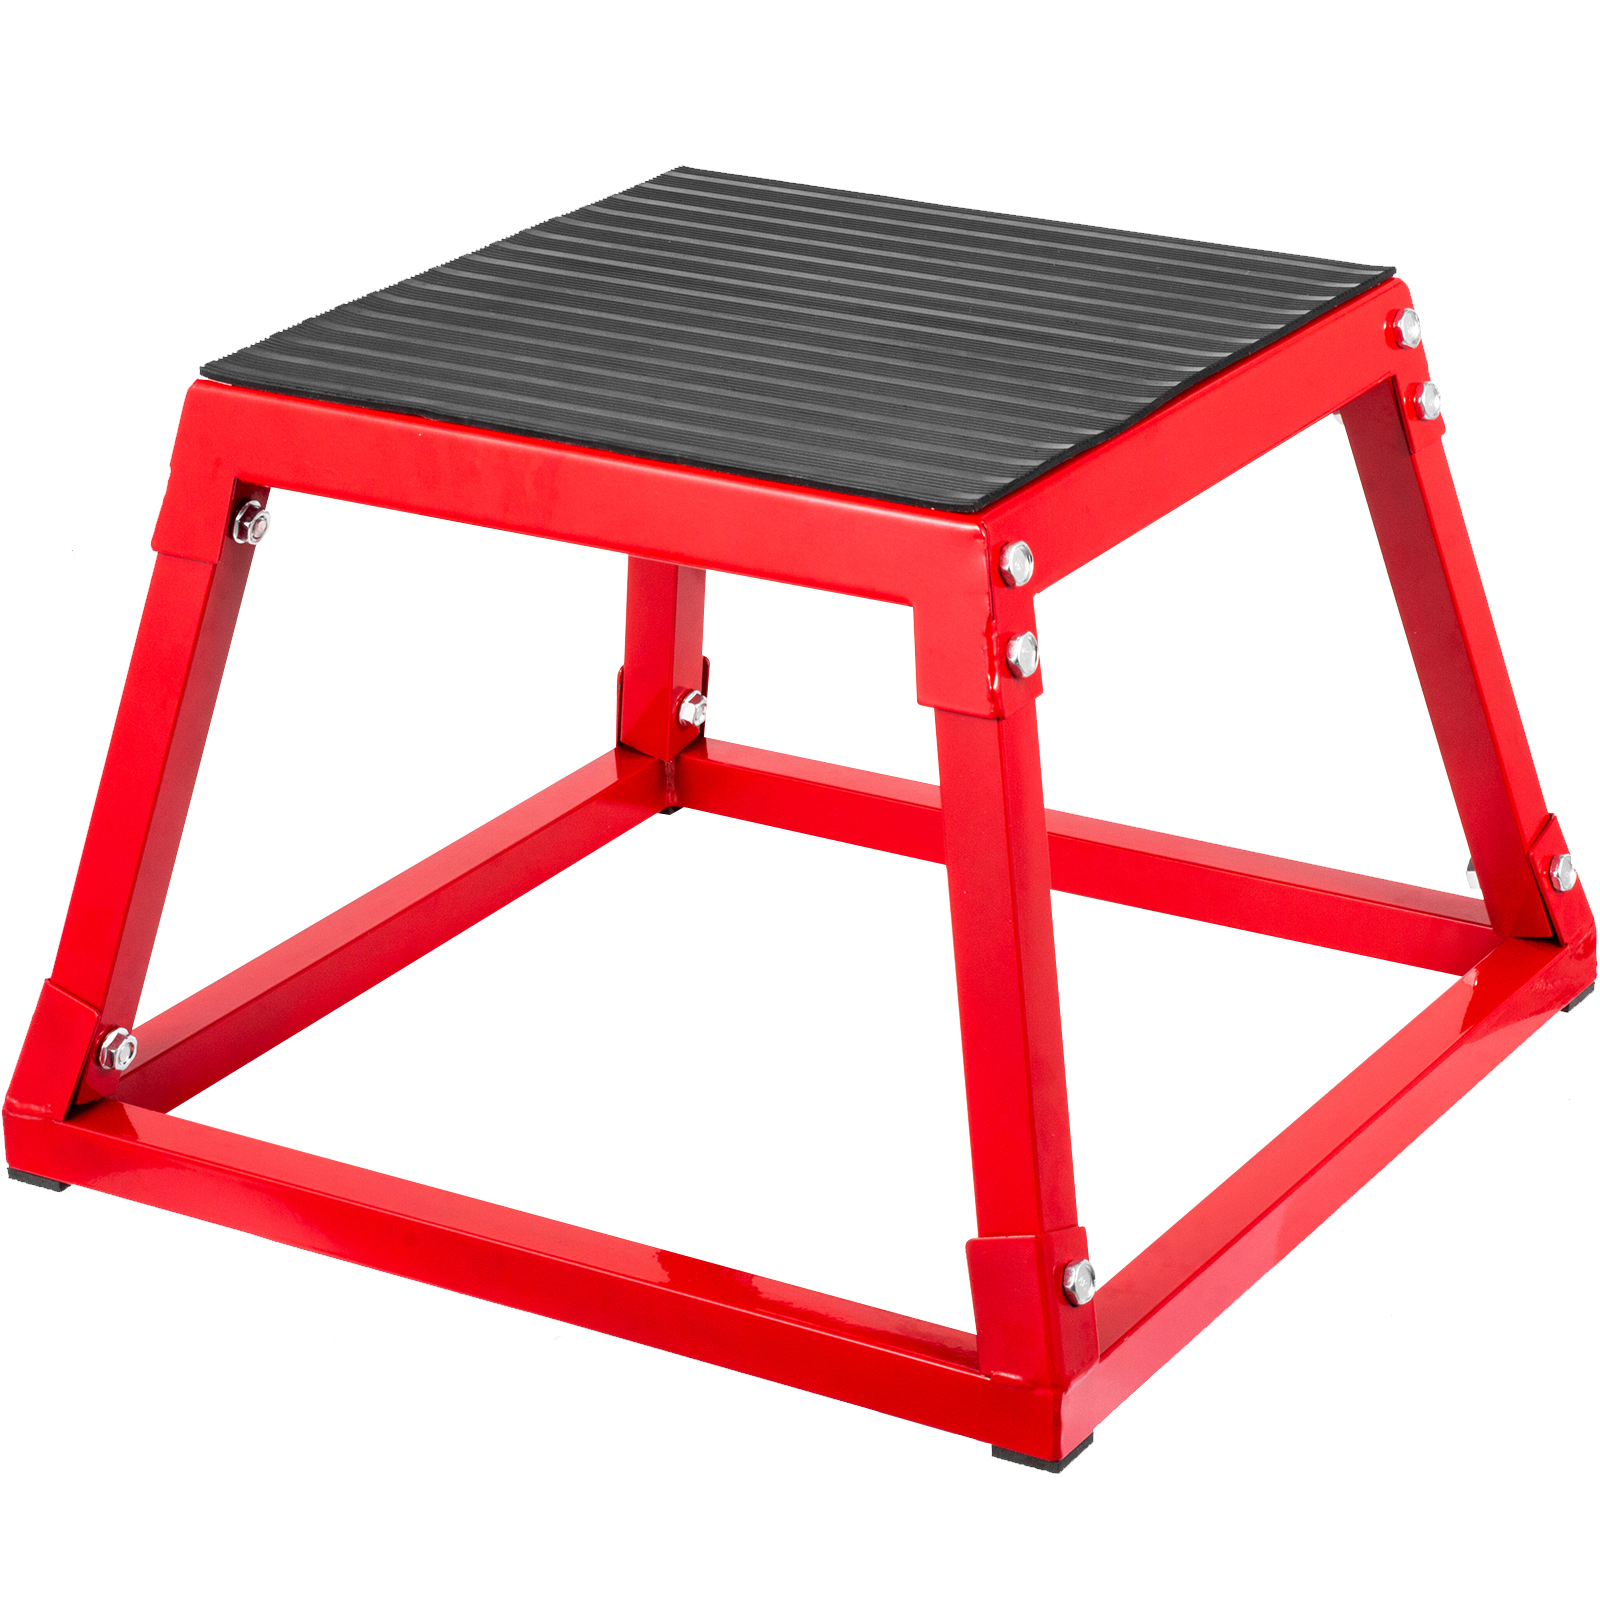 TECSPACE 30 inch plyometric Box,plyometric Platform for Box Jump Platforms,RED